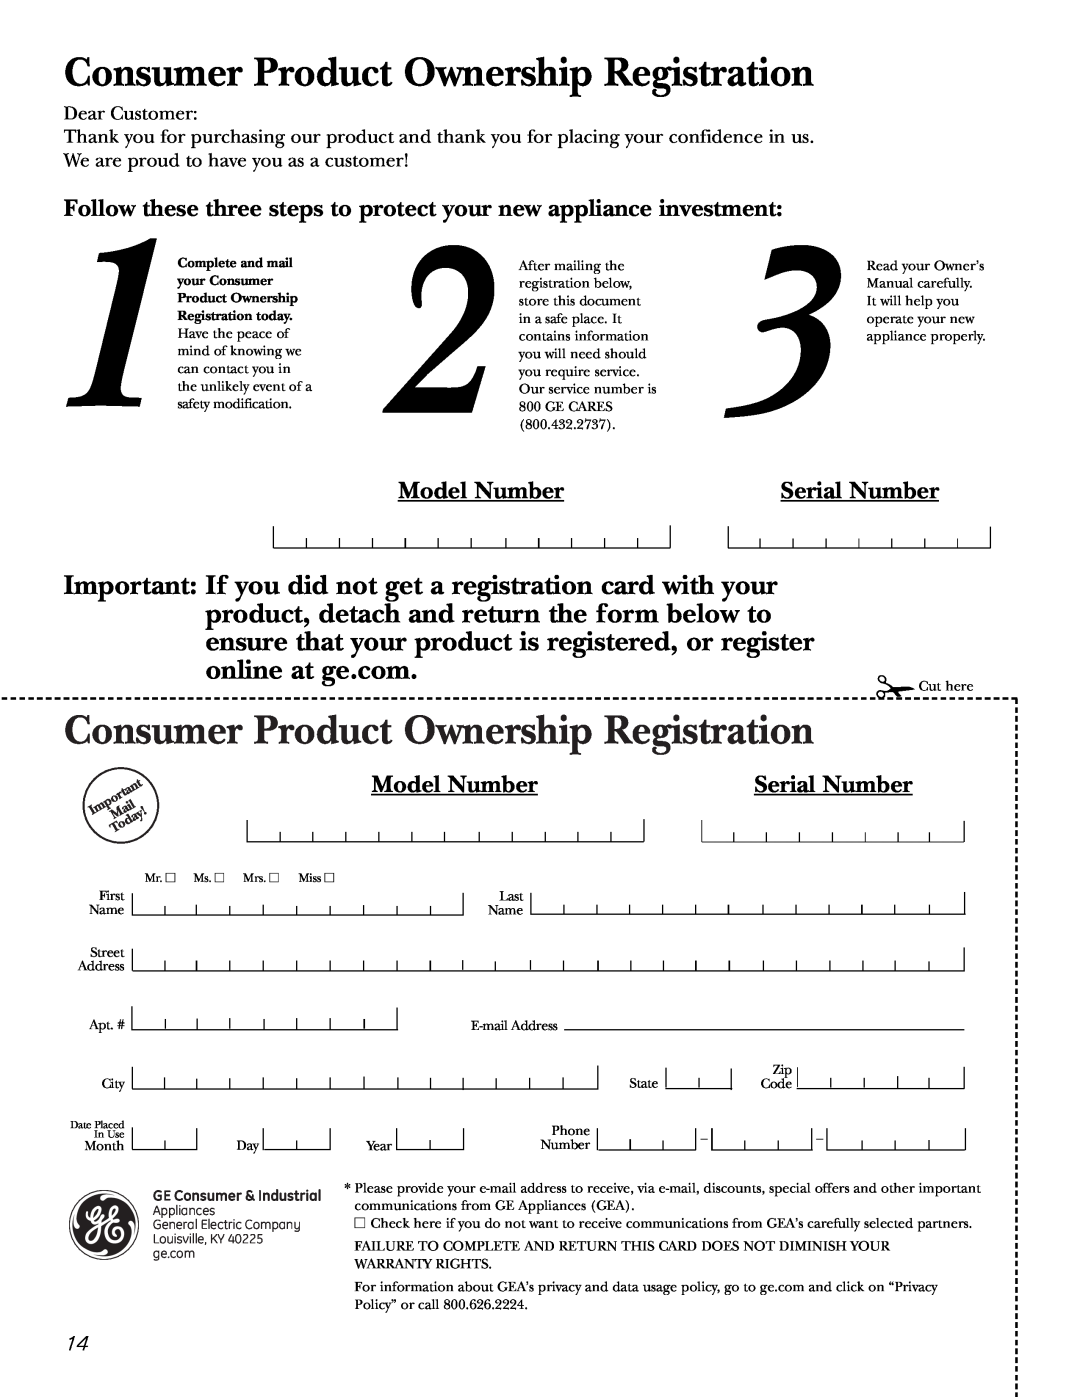 GE FCM7, FCM9, FCM5 Model Number, Serial Number, Dear Customer, Consumer Product Ownership Registration, Complete and mail 